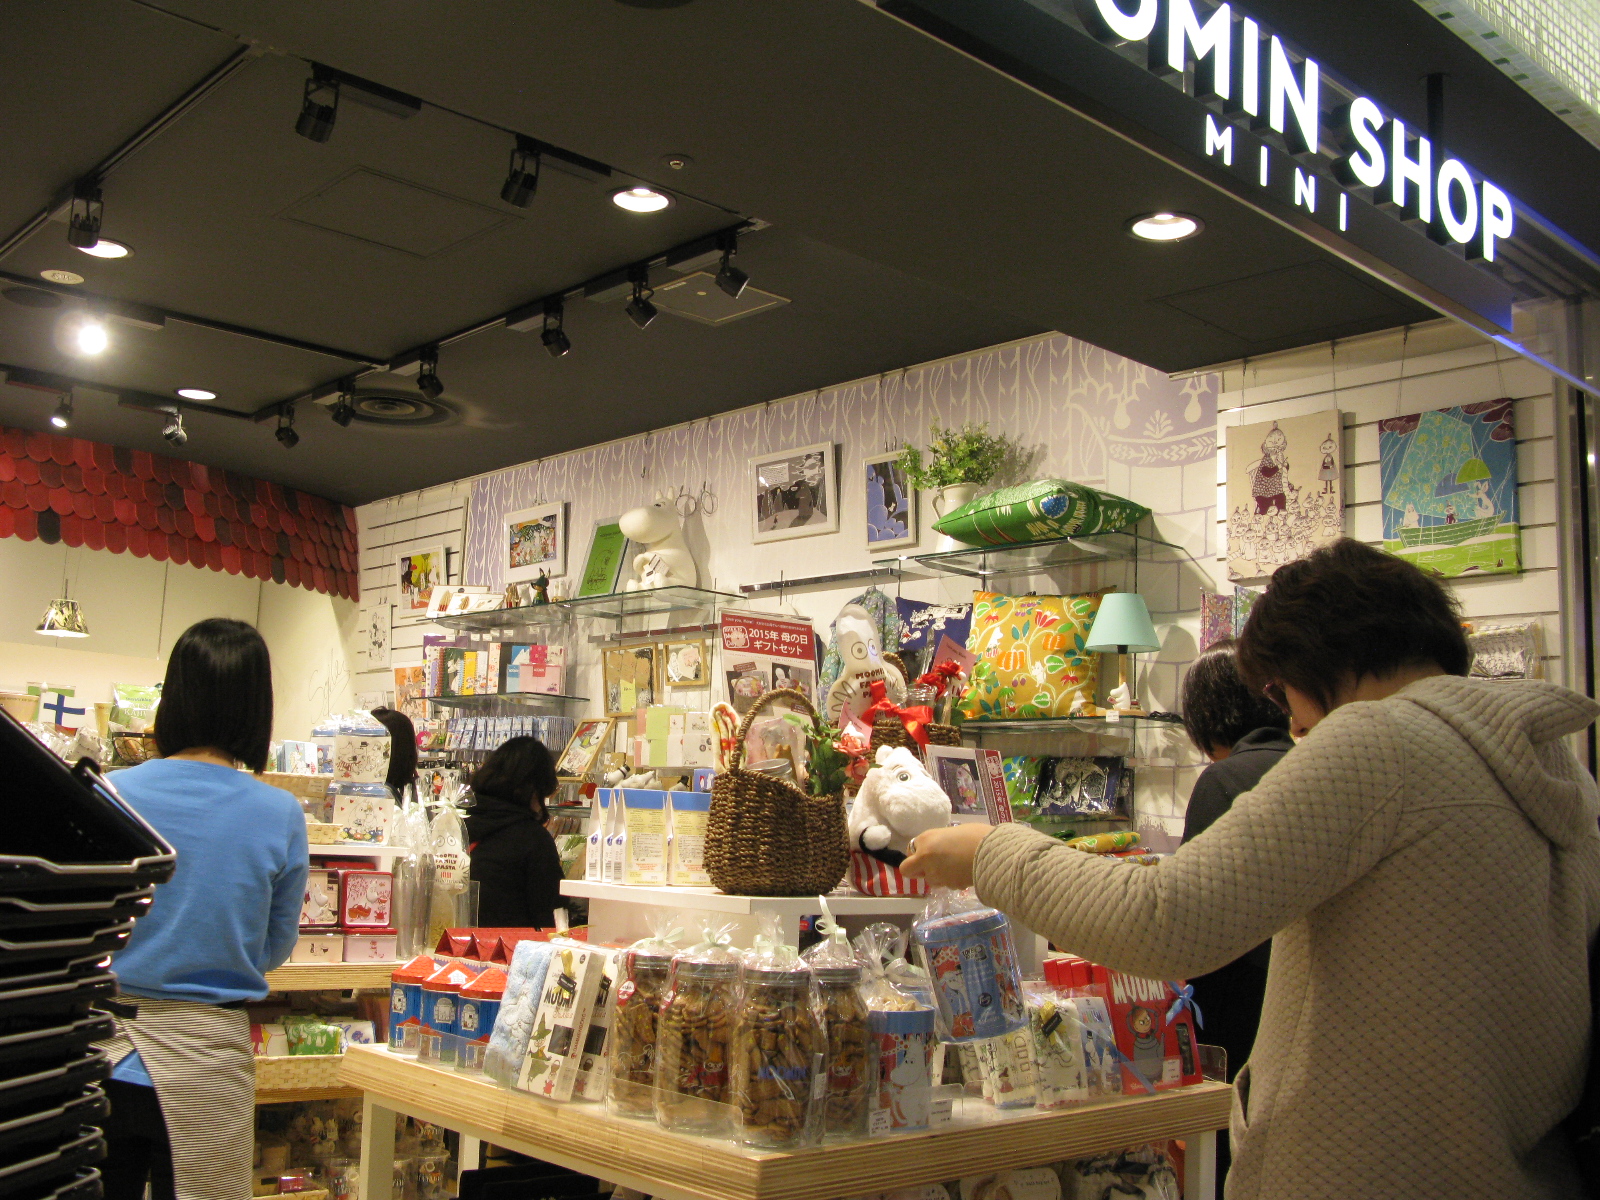 Moomin shop, Character Street